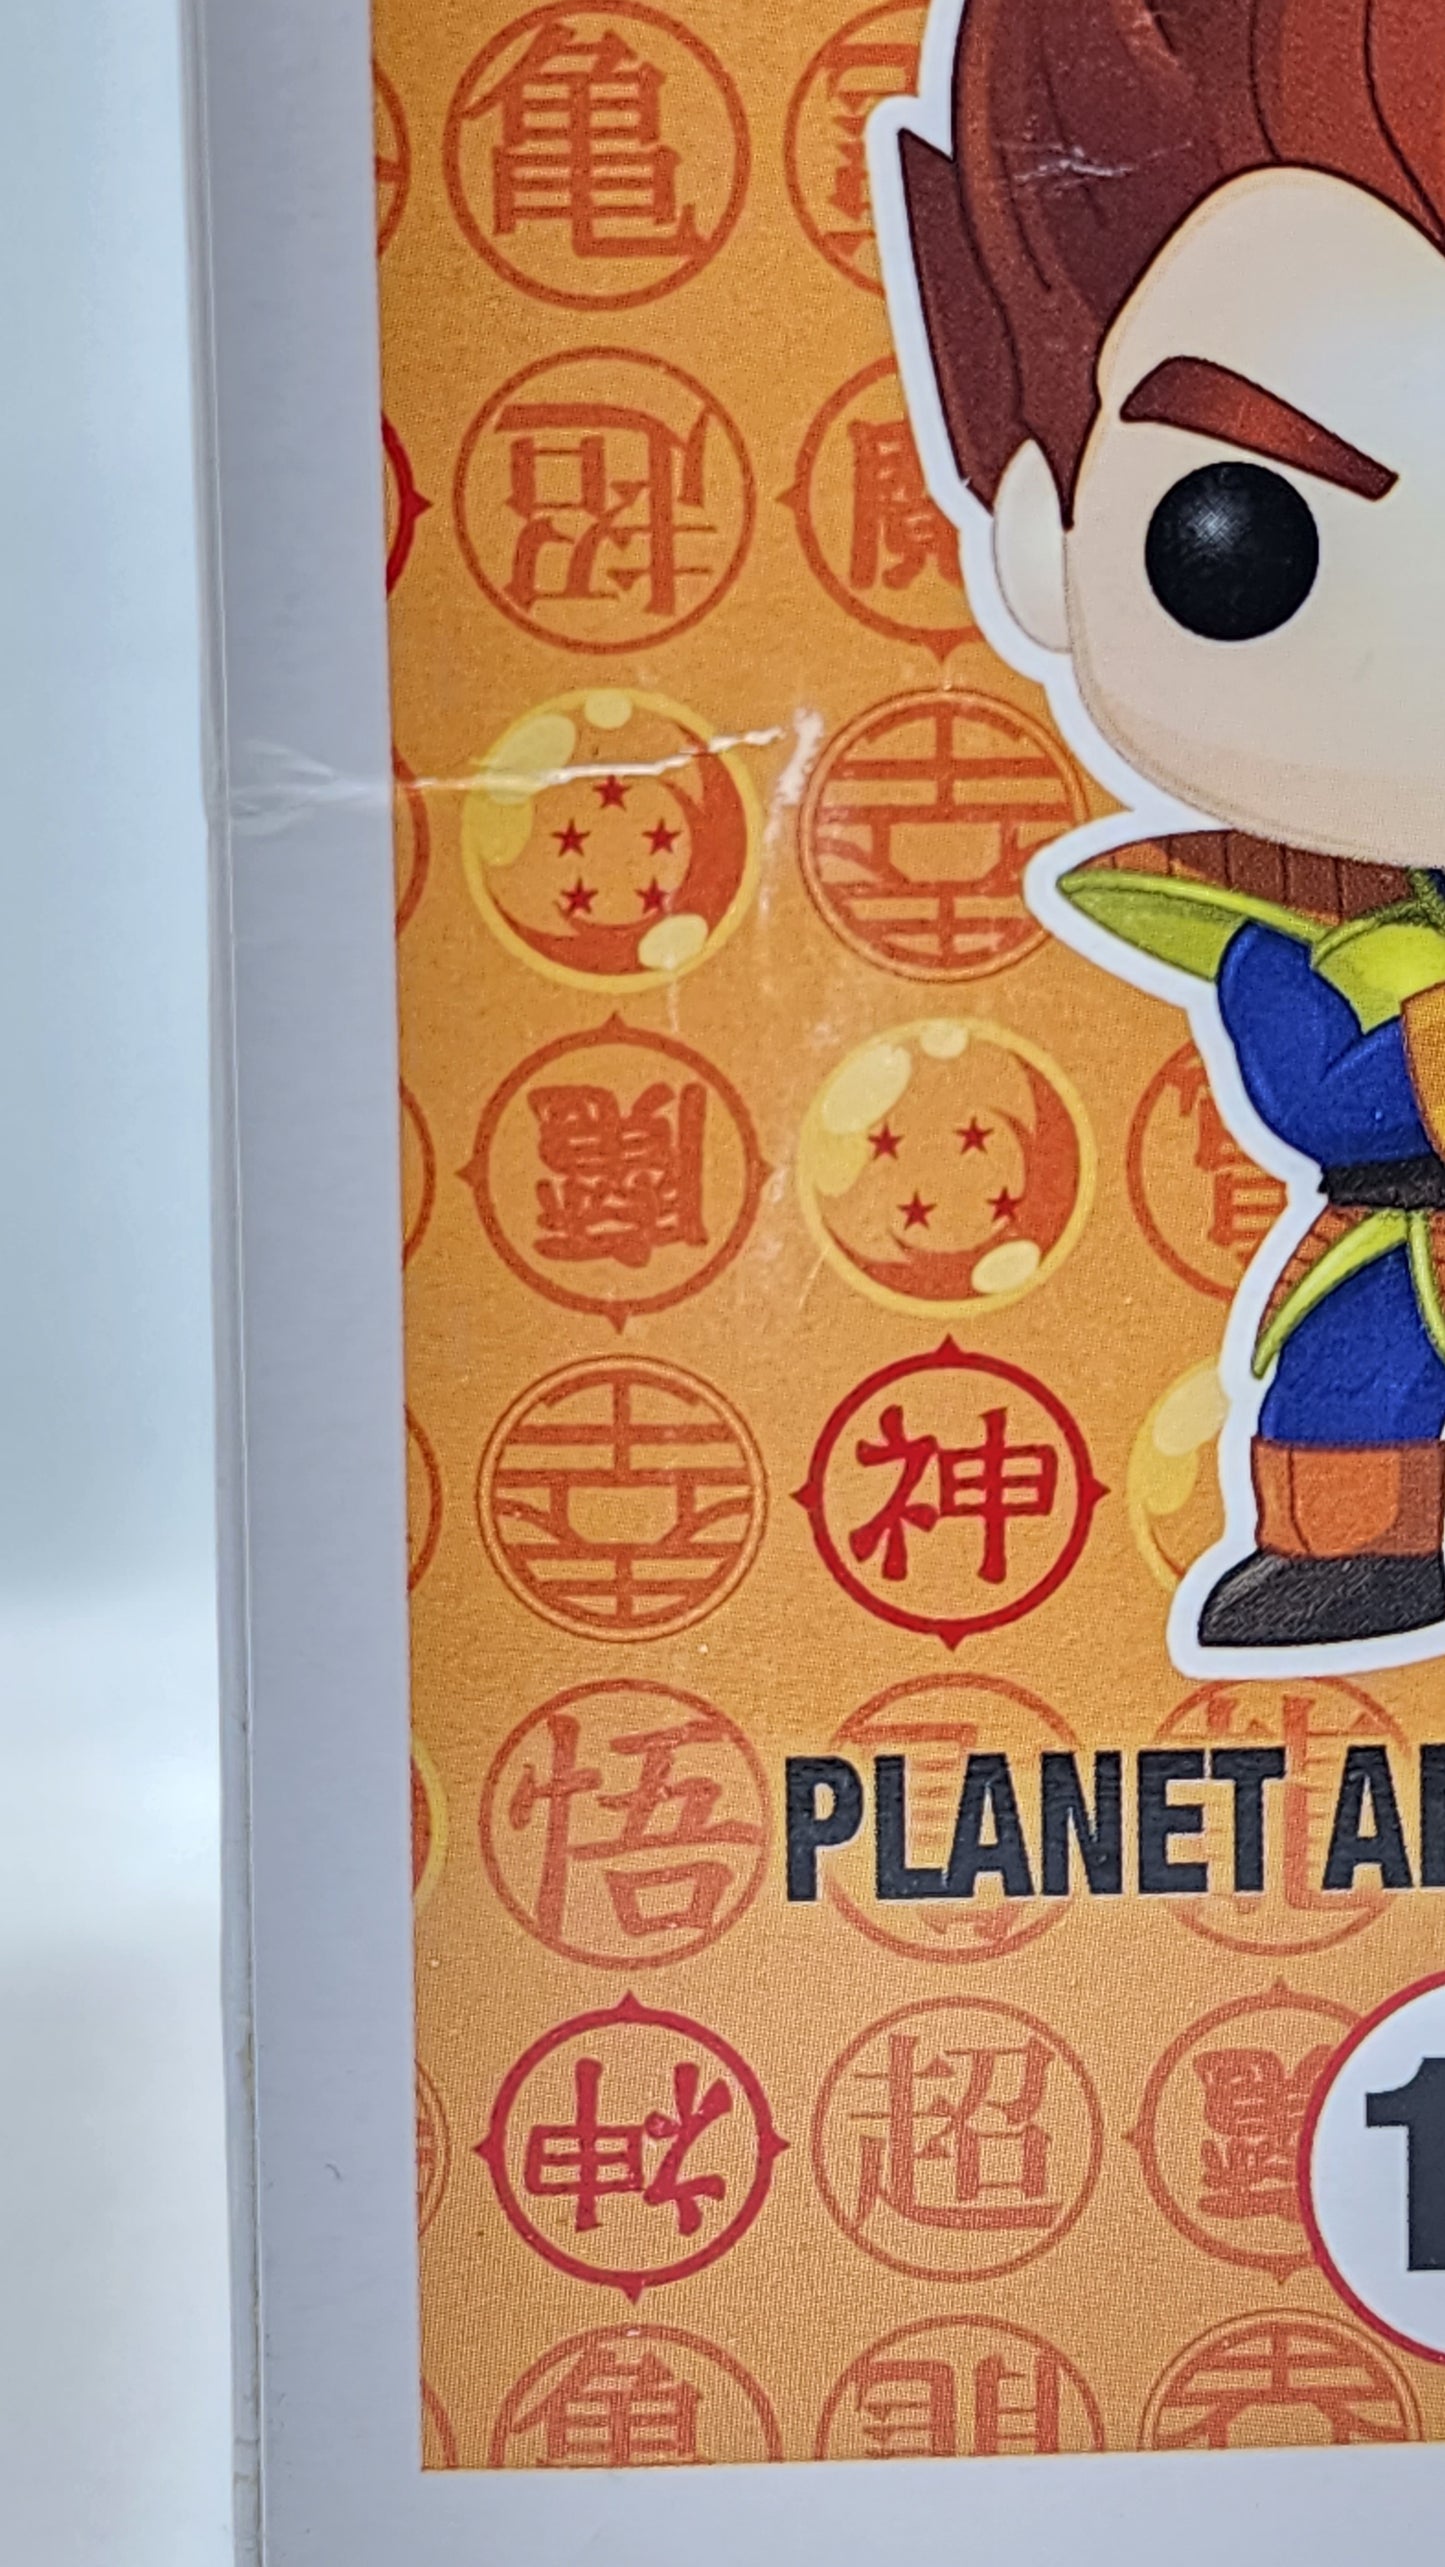 SOLD - 2014 Planet Arlia Vegeta Toy Tokyo Exclusive